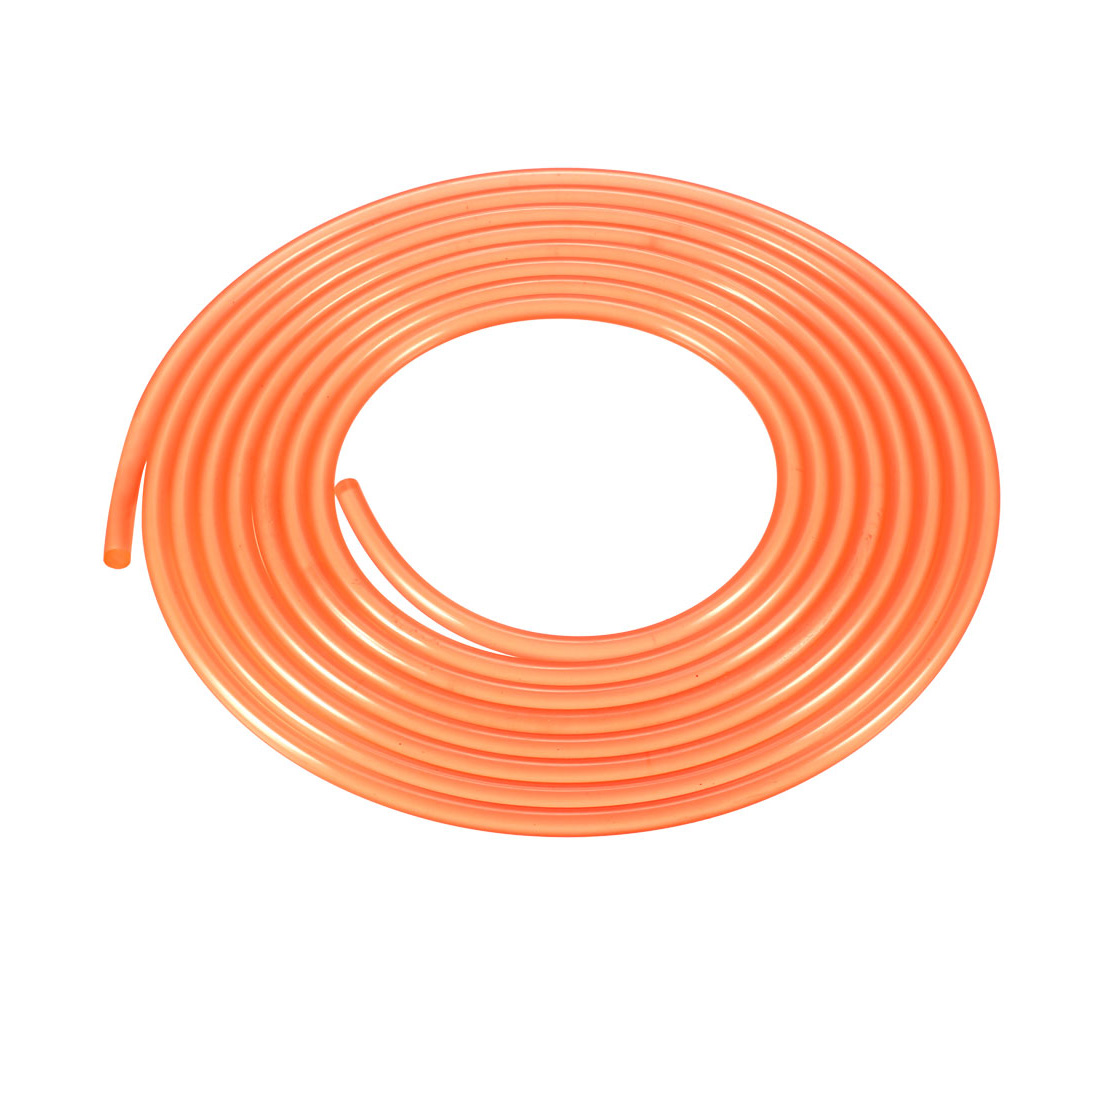 Unique Bargains 10ft 5mm PU Transmission Round Belt High-Performance Urethane Belting Orange